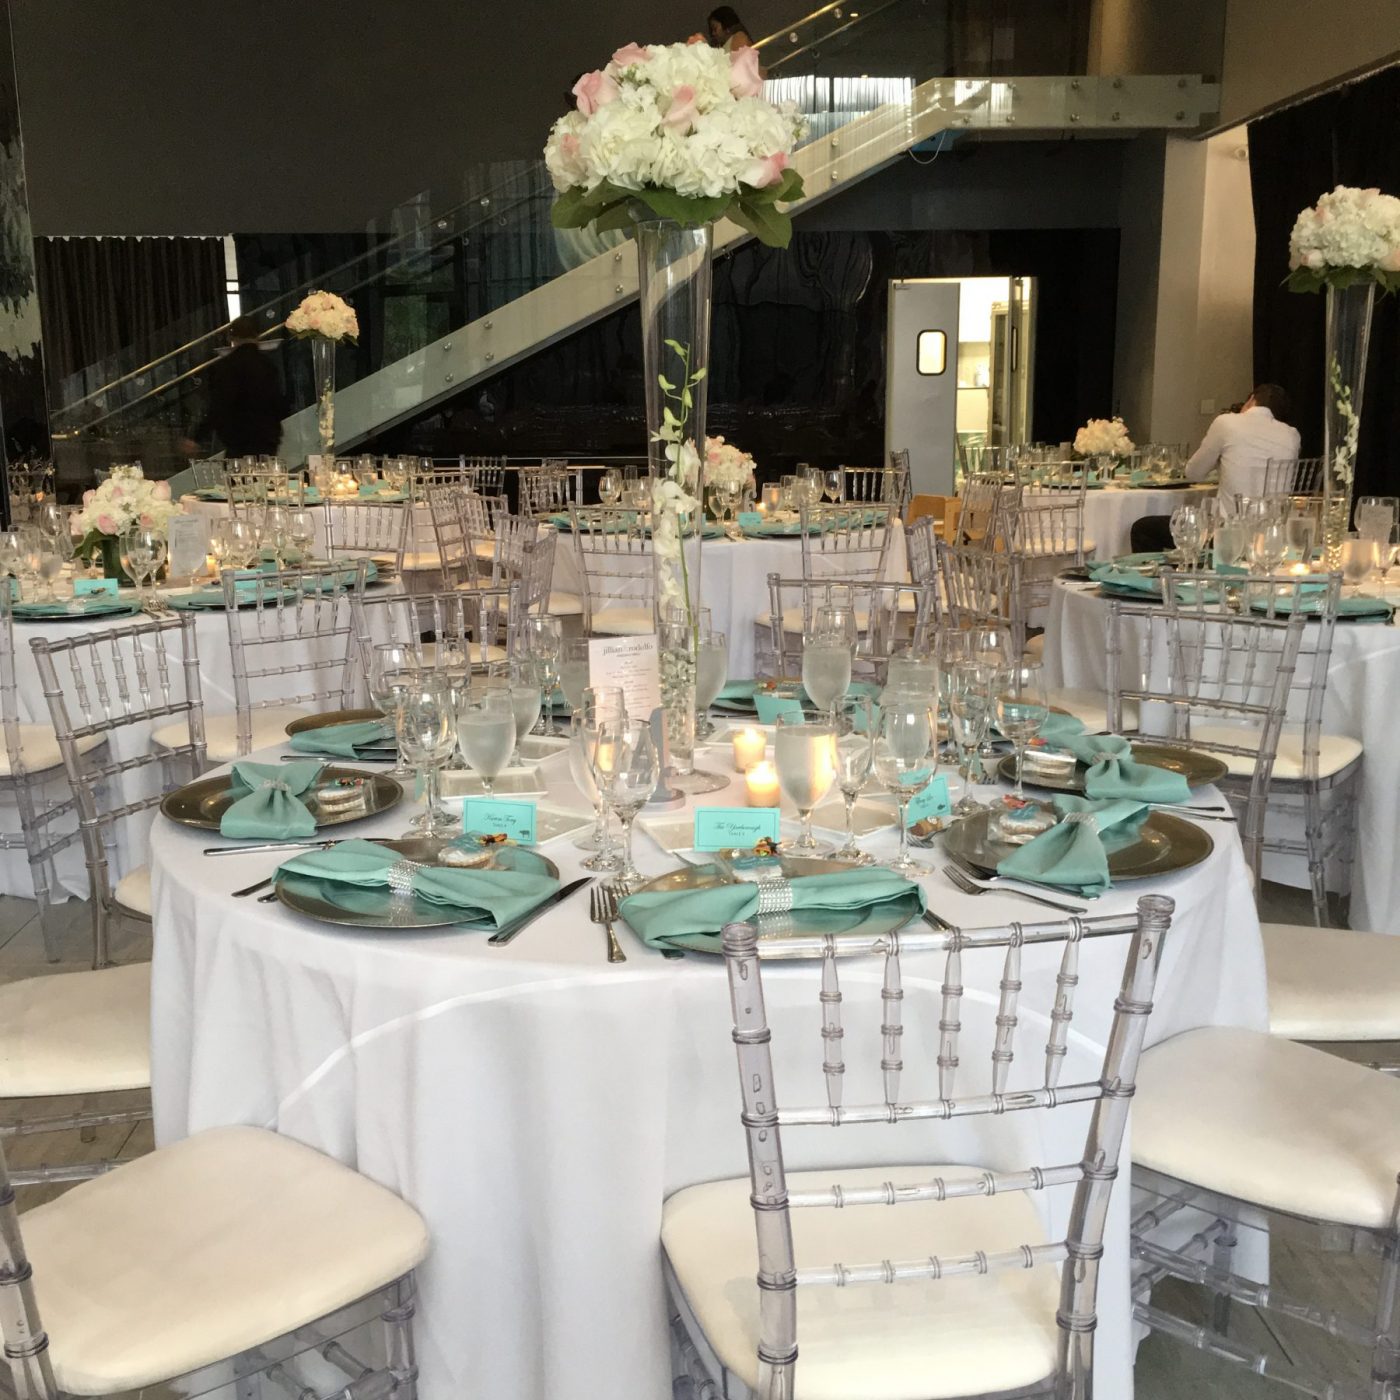 The GlassHouse Wedding Venue